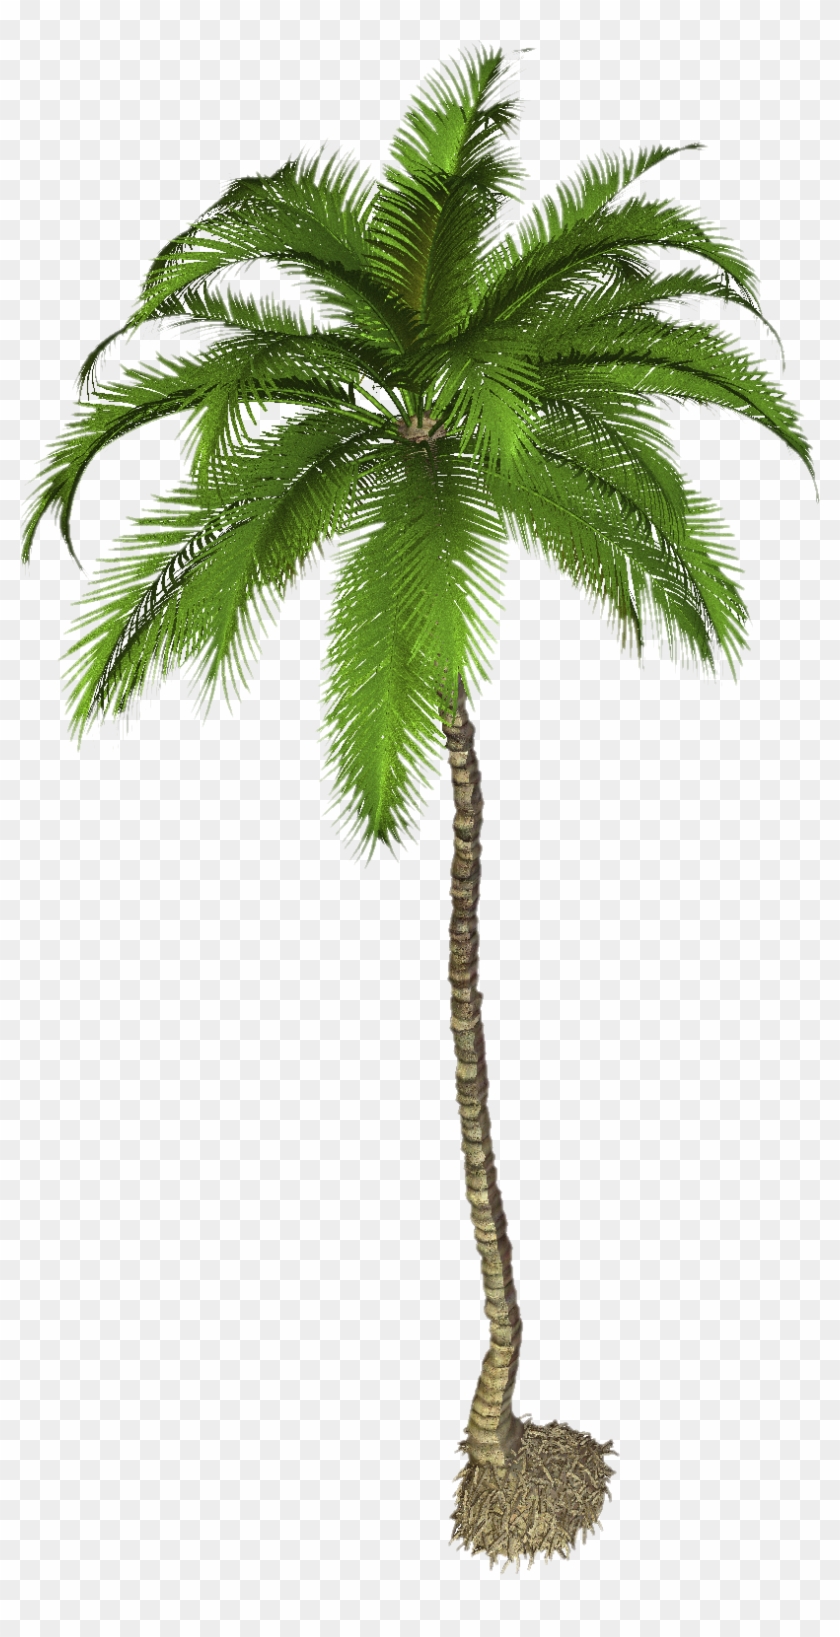 Cancel - Palm Tree White Background #959602